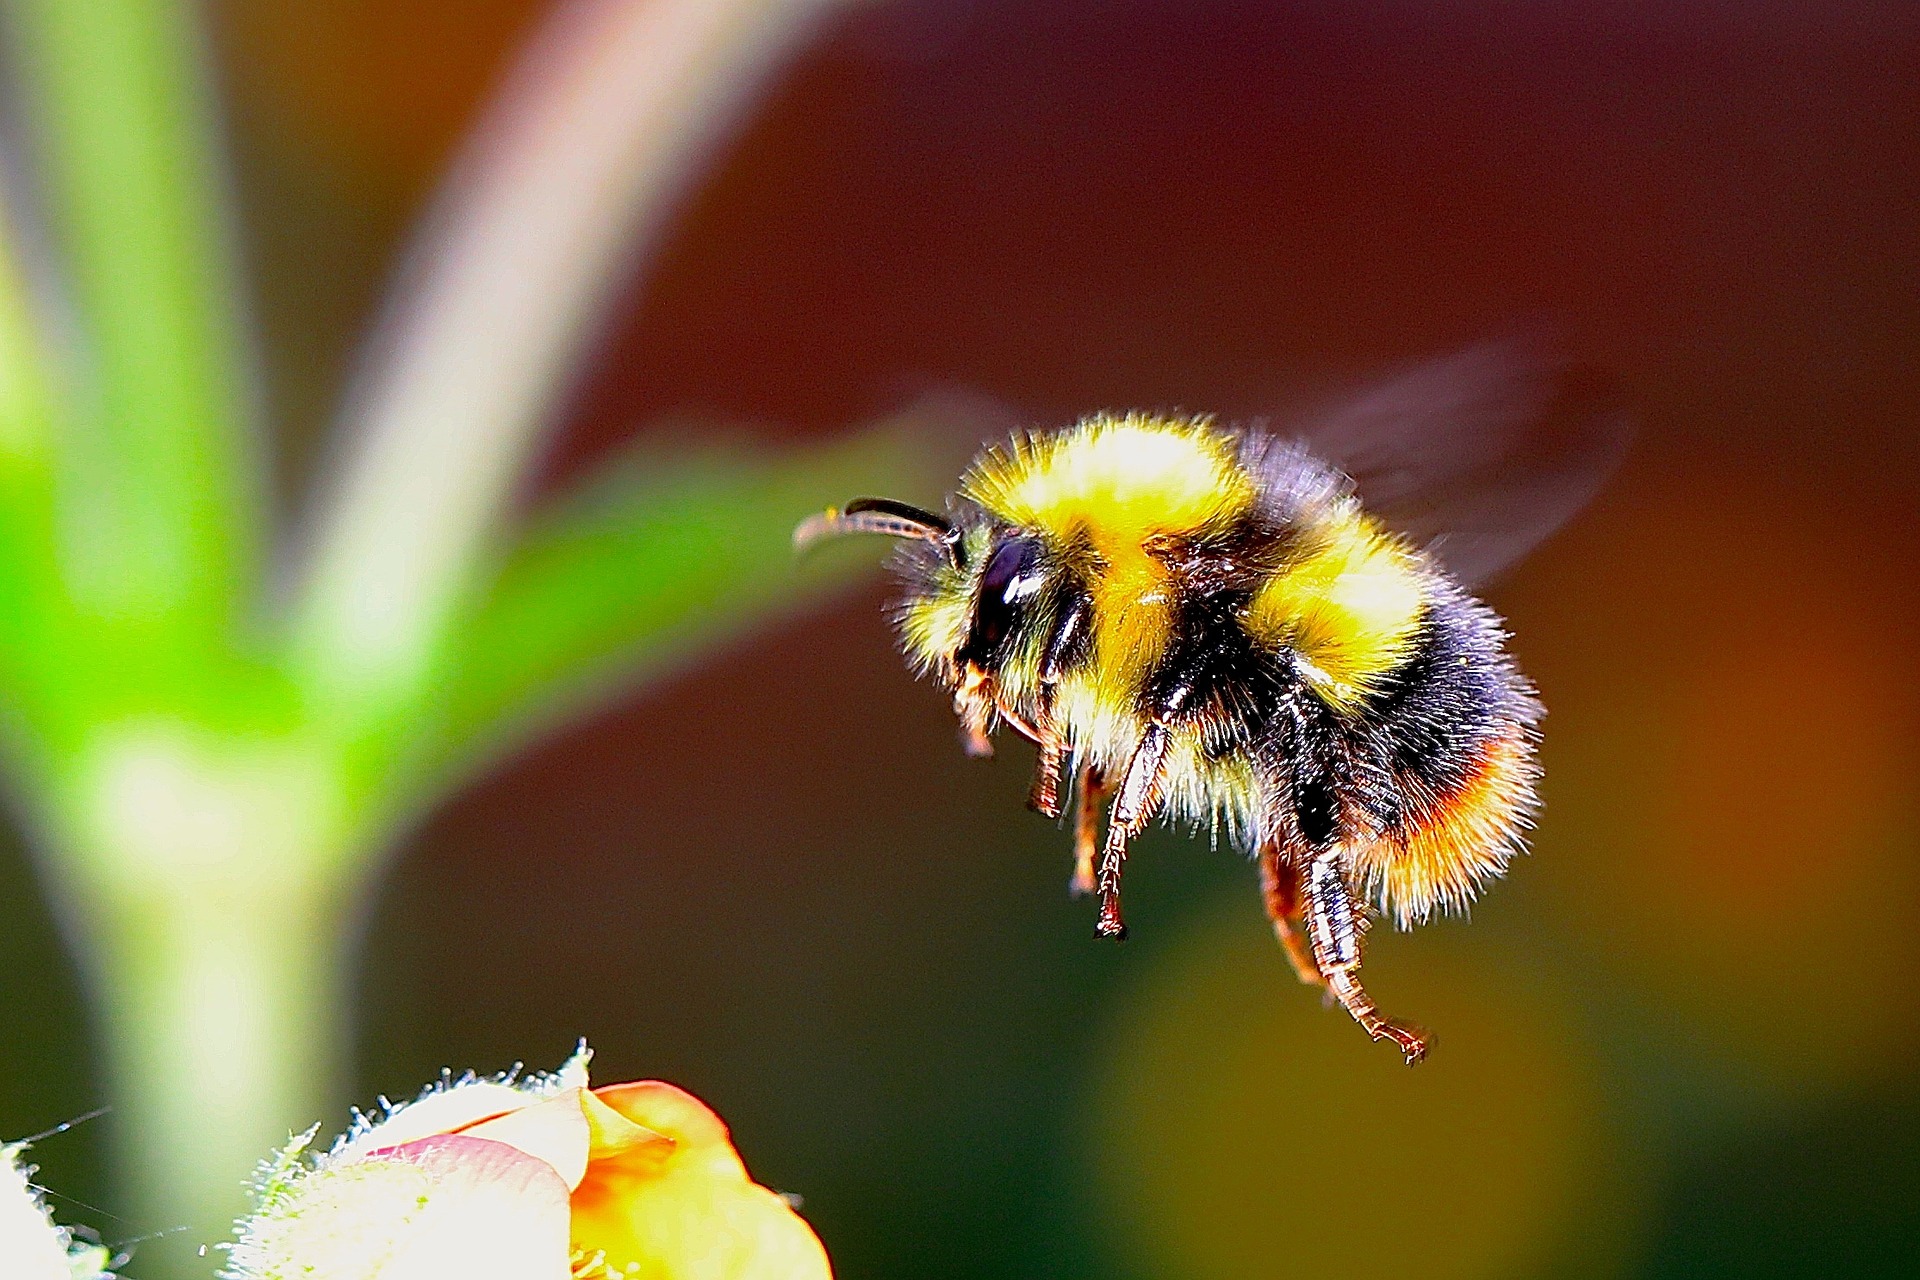 Pollination bee